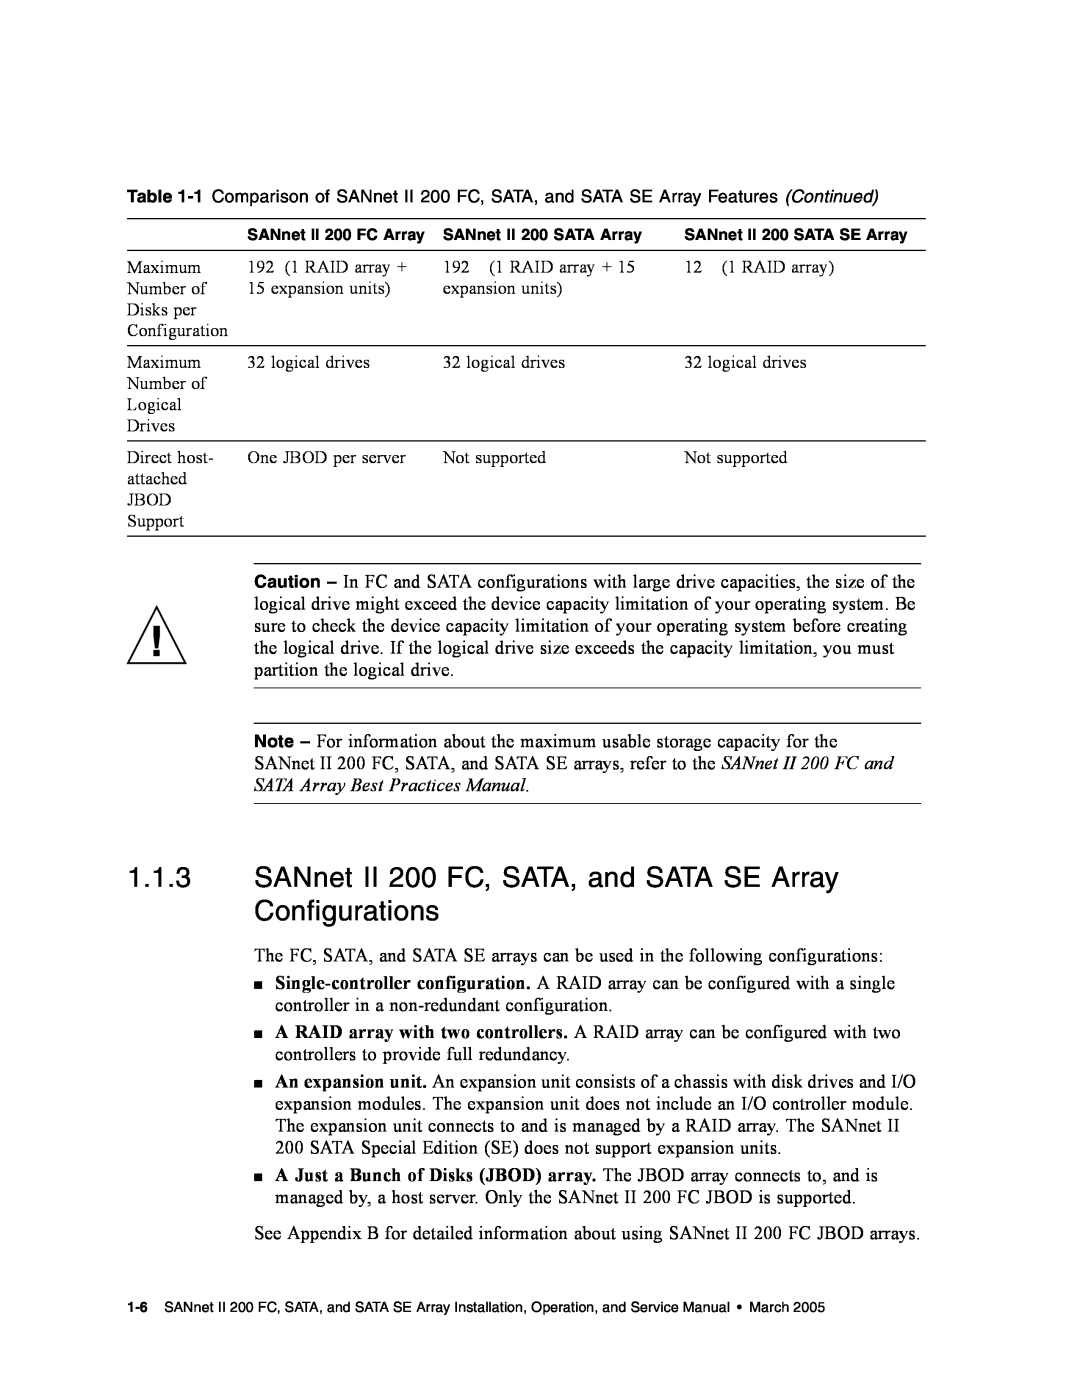 Dot Hill Systems service manual SANnet II 200 FC, SATA, and SATA SE Array Configurations 